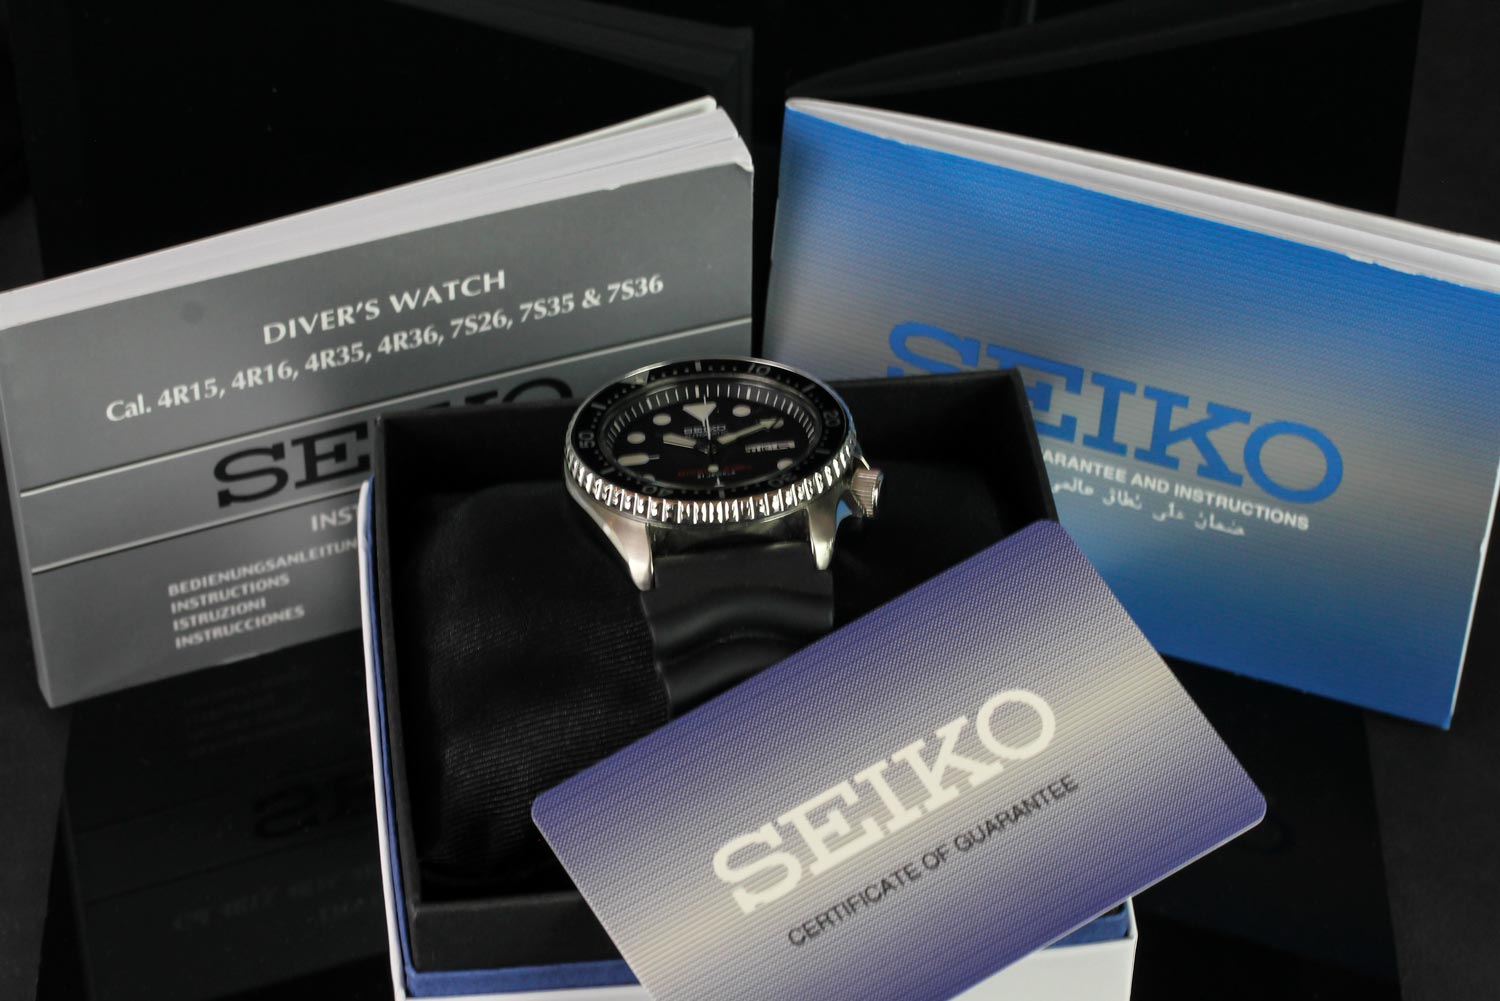 NEW OLD STOCK GENTLEMEN'S SEIKO DIVERS WRISTWATCH REF SKX007J W/BOX & PAPERS